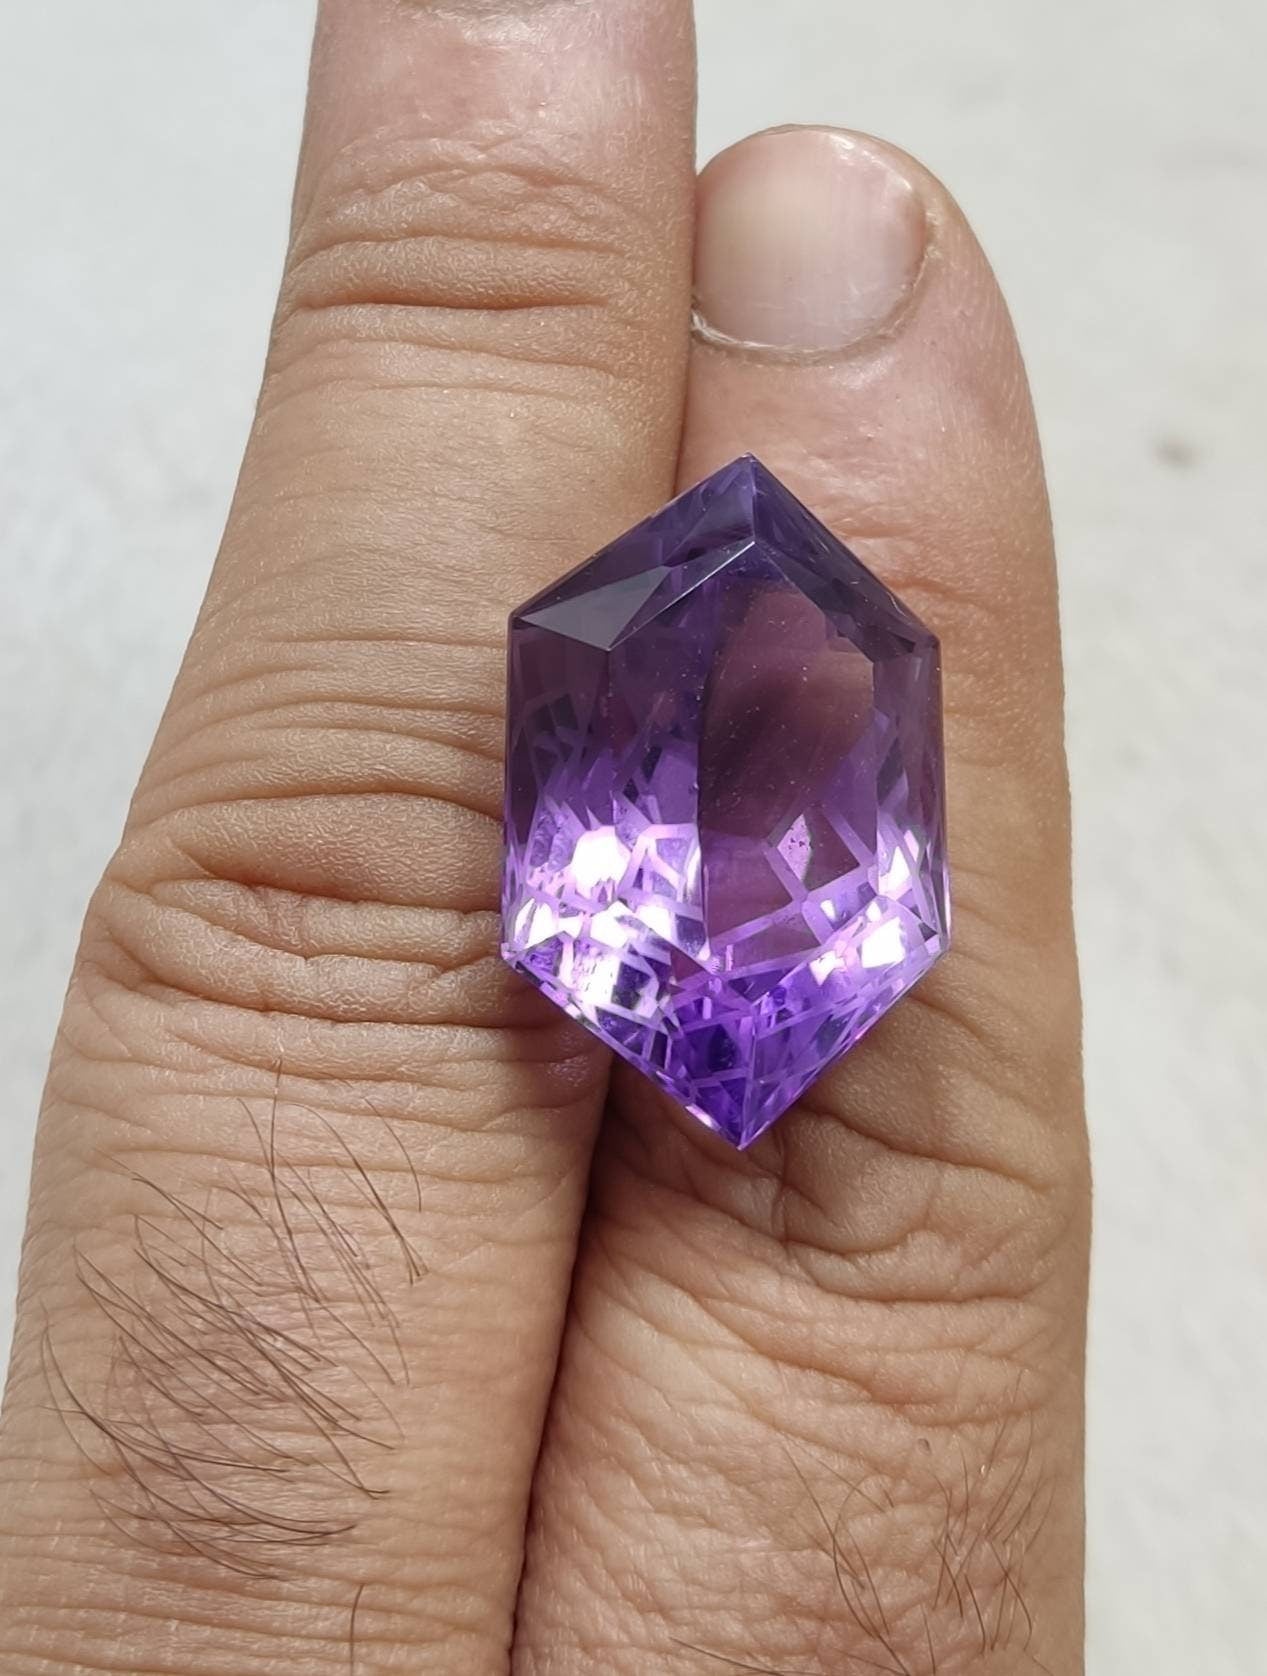 An amazing faceted fancy hexagon cut amethyst gemstone 36 carats